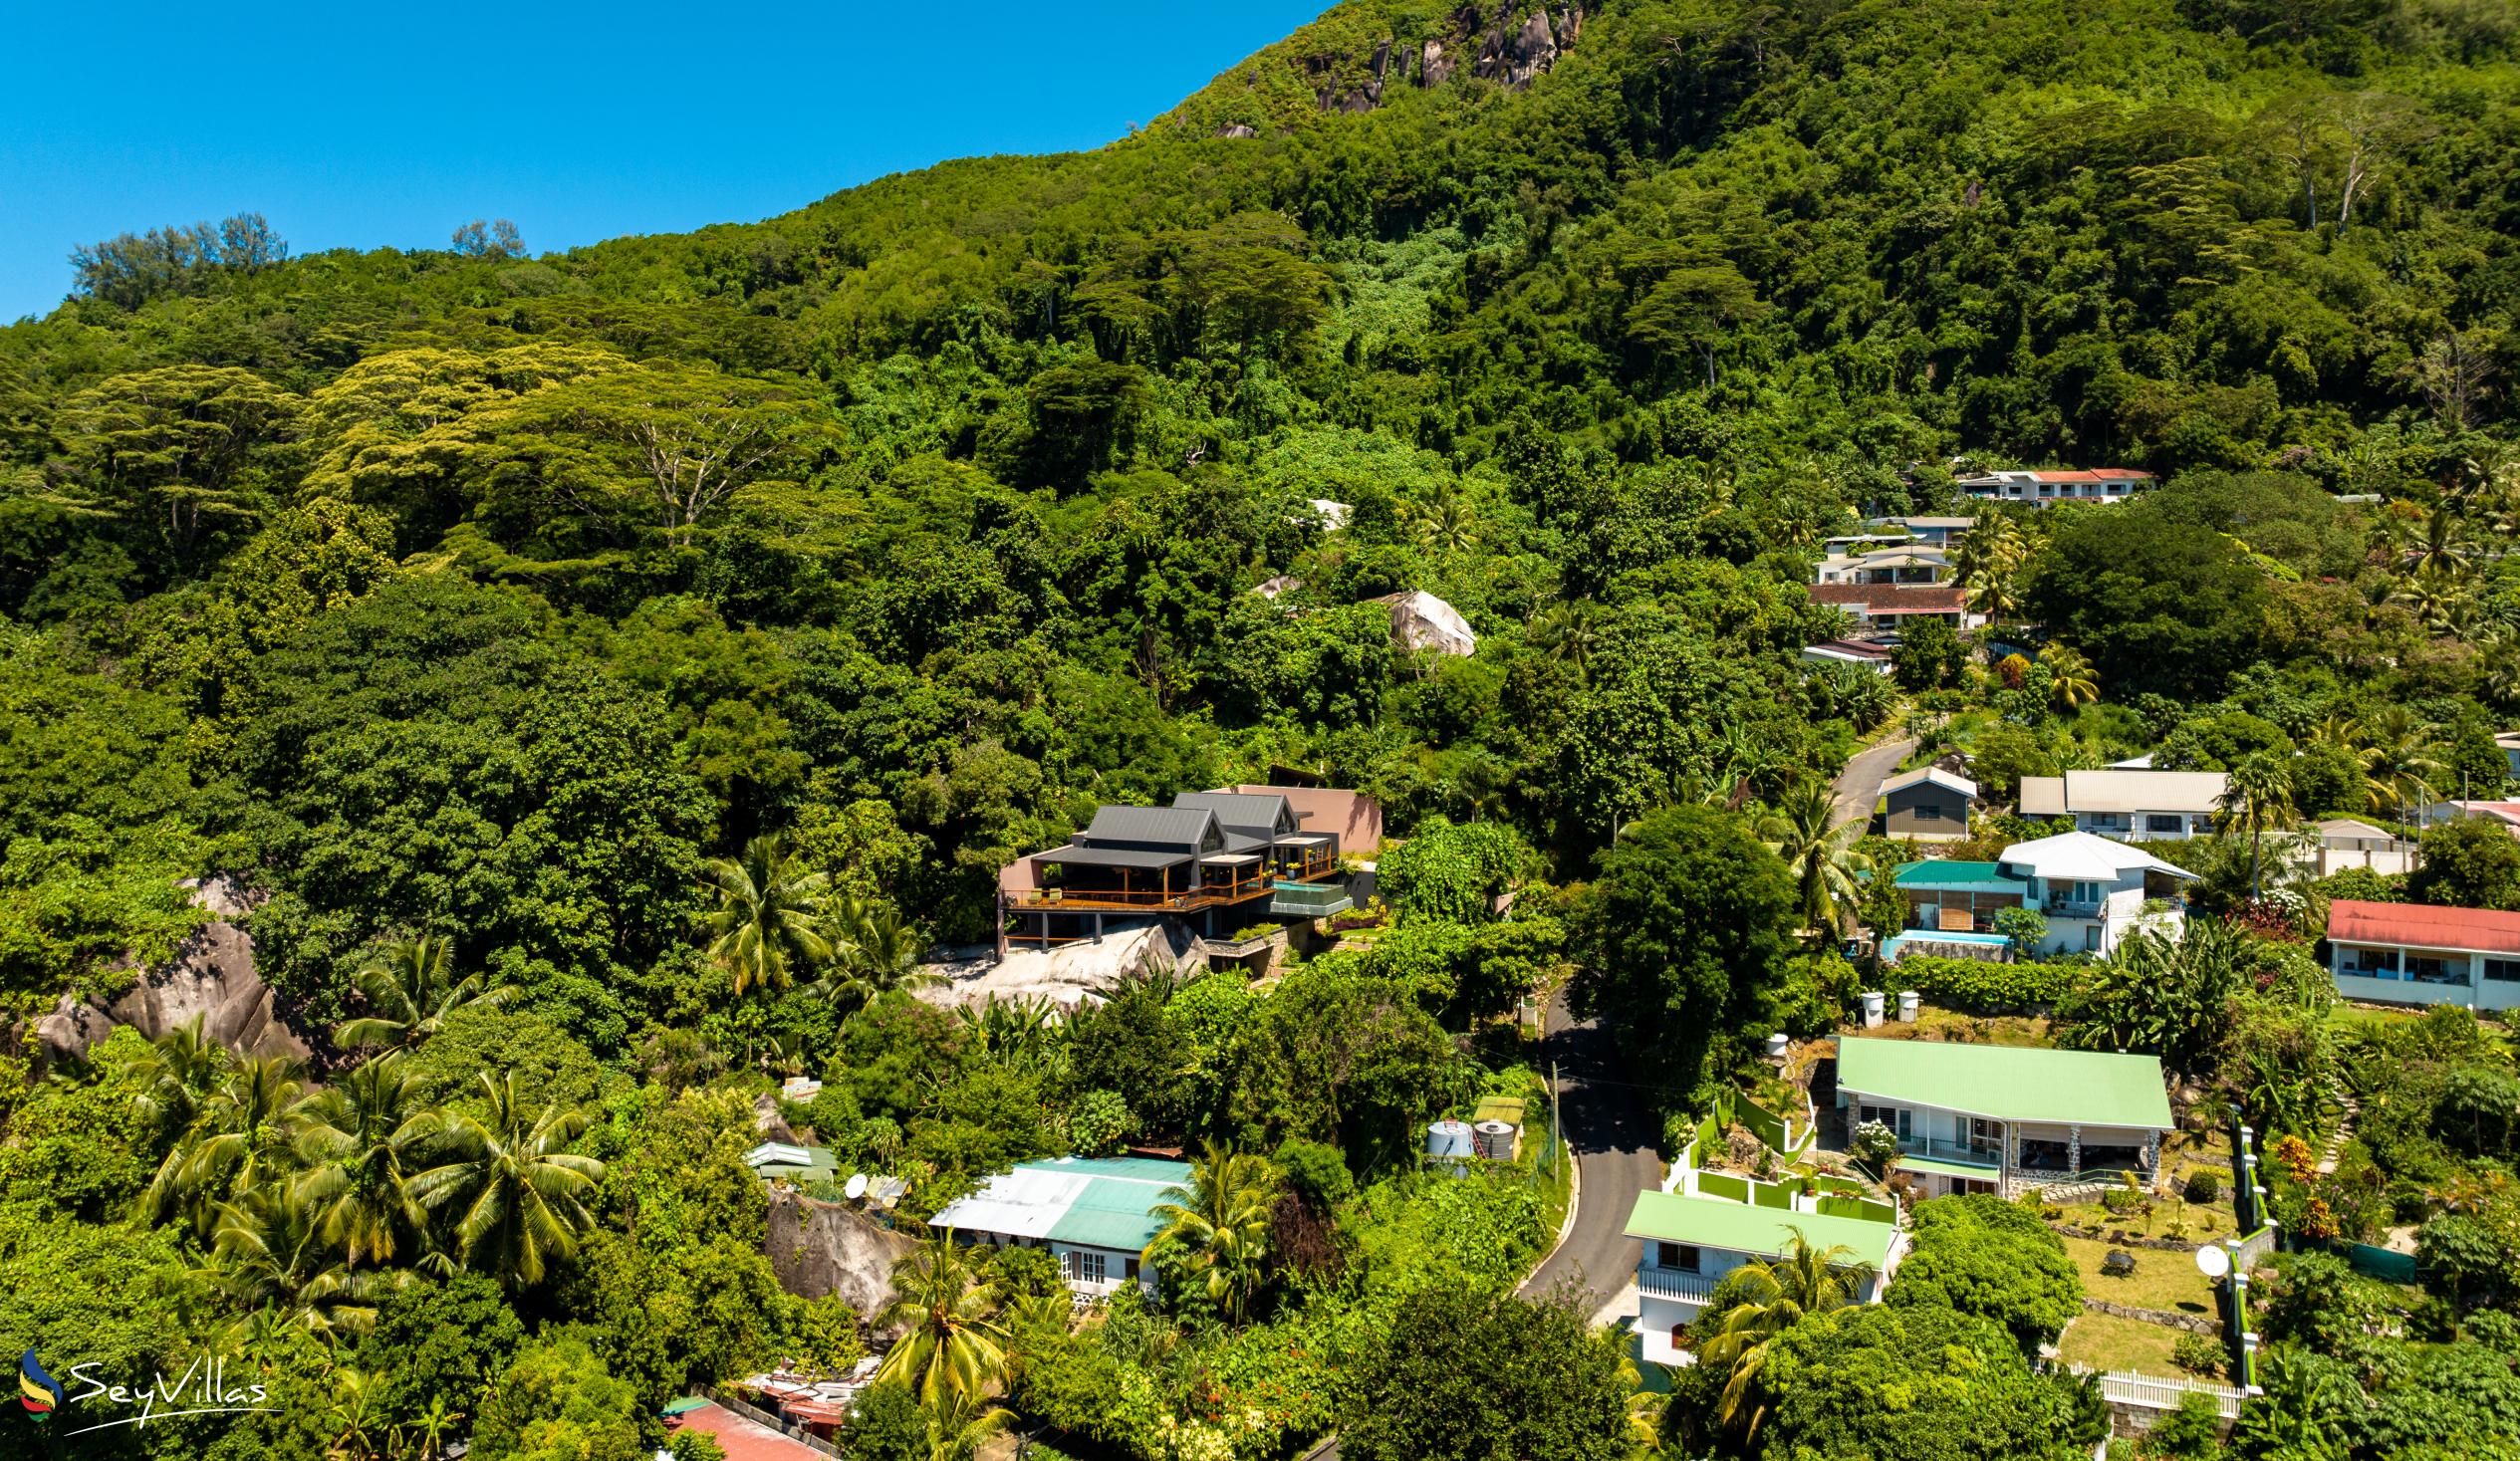 Foto 60: Maison Gaia - Posizione - Mahé (Seychelles)